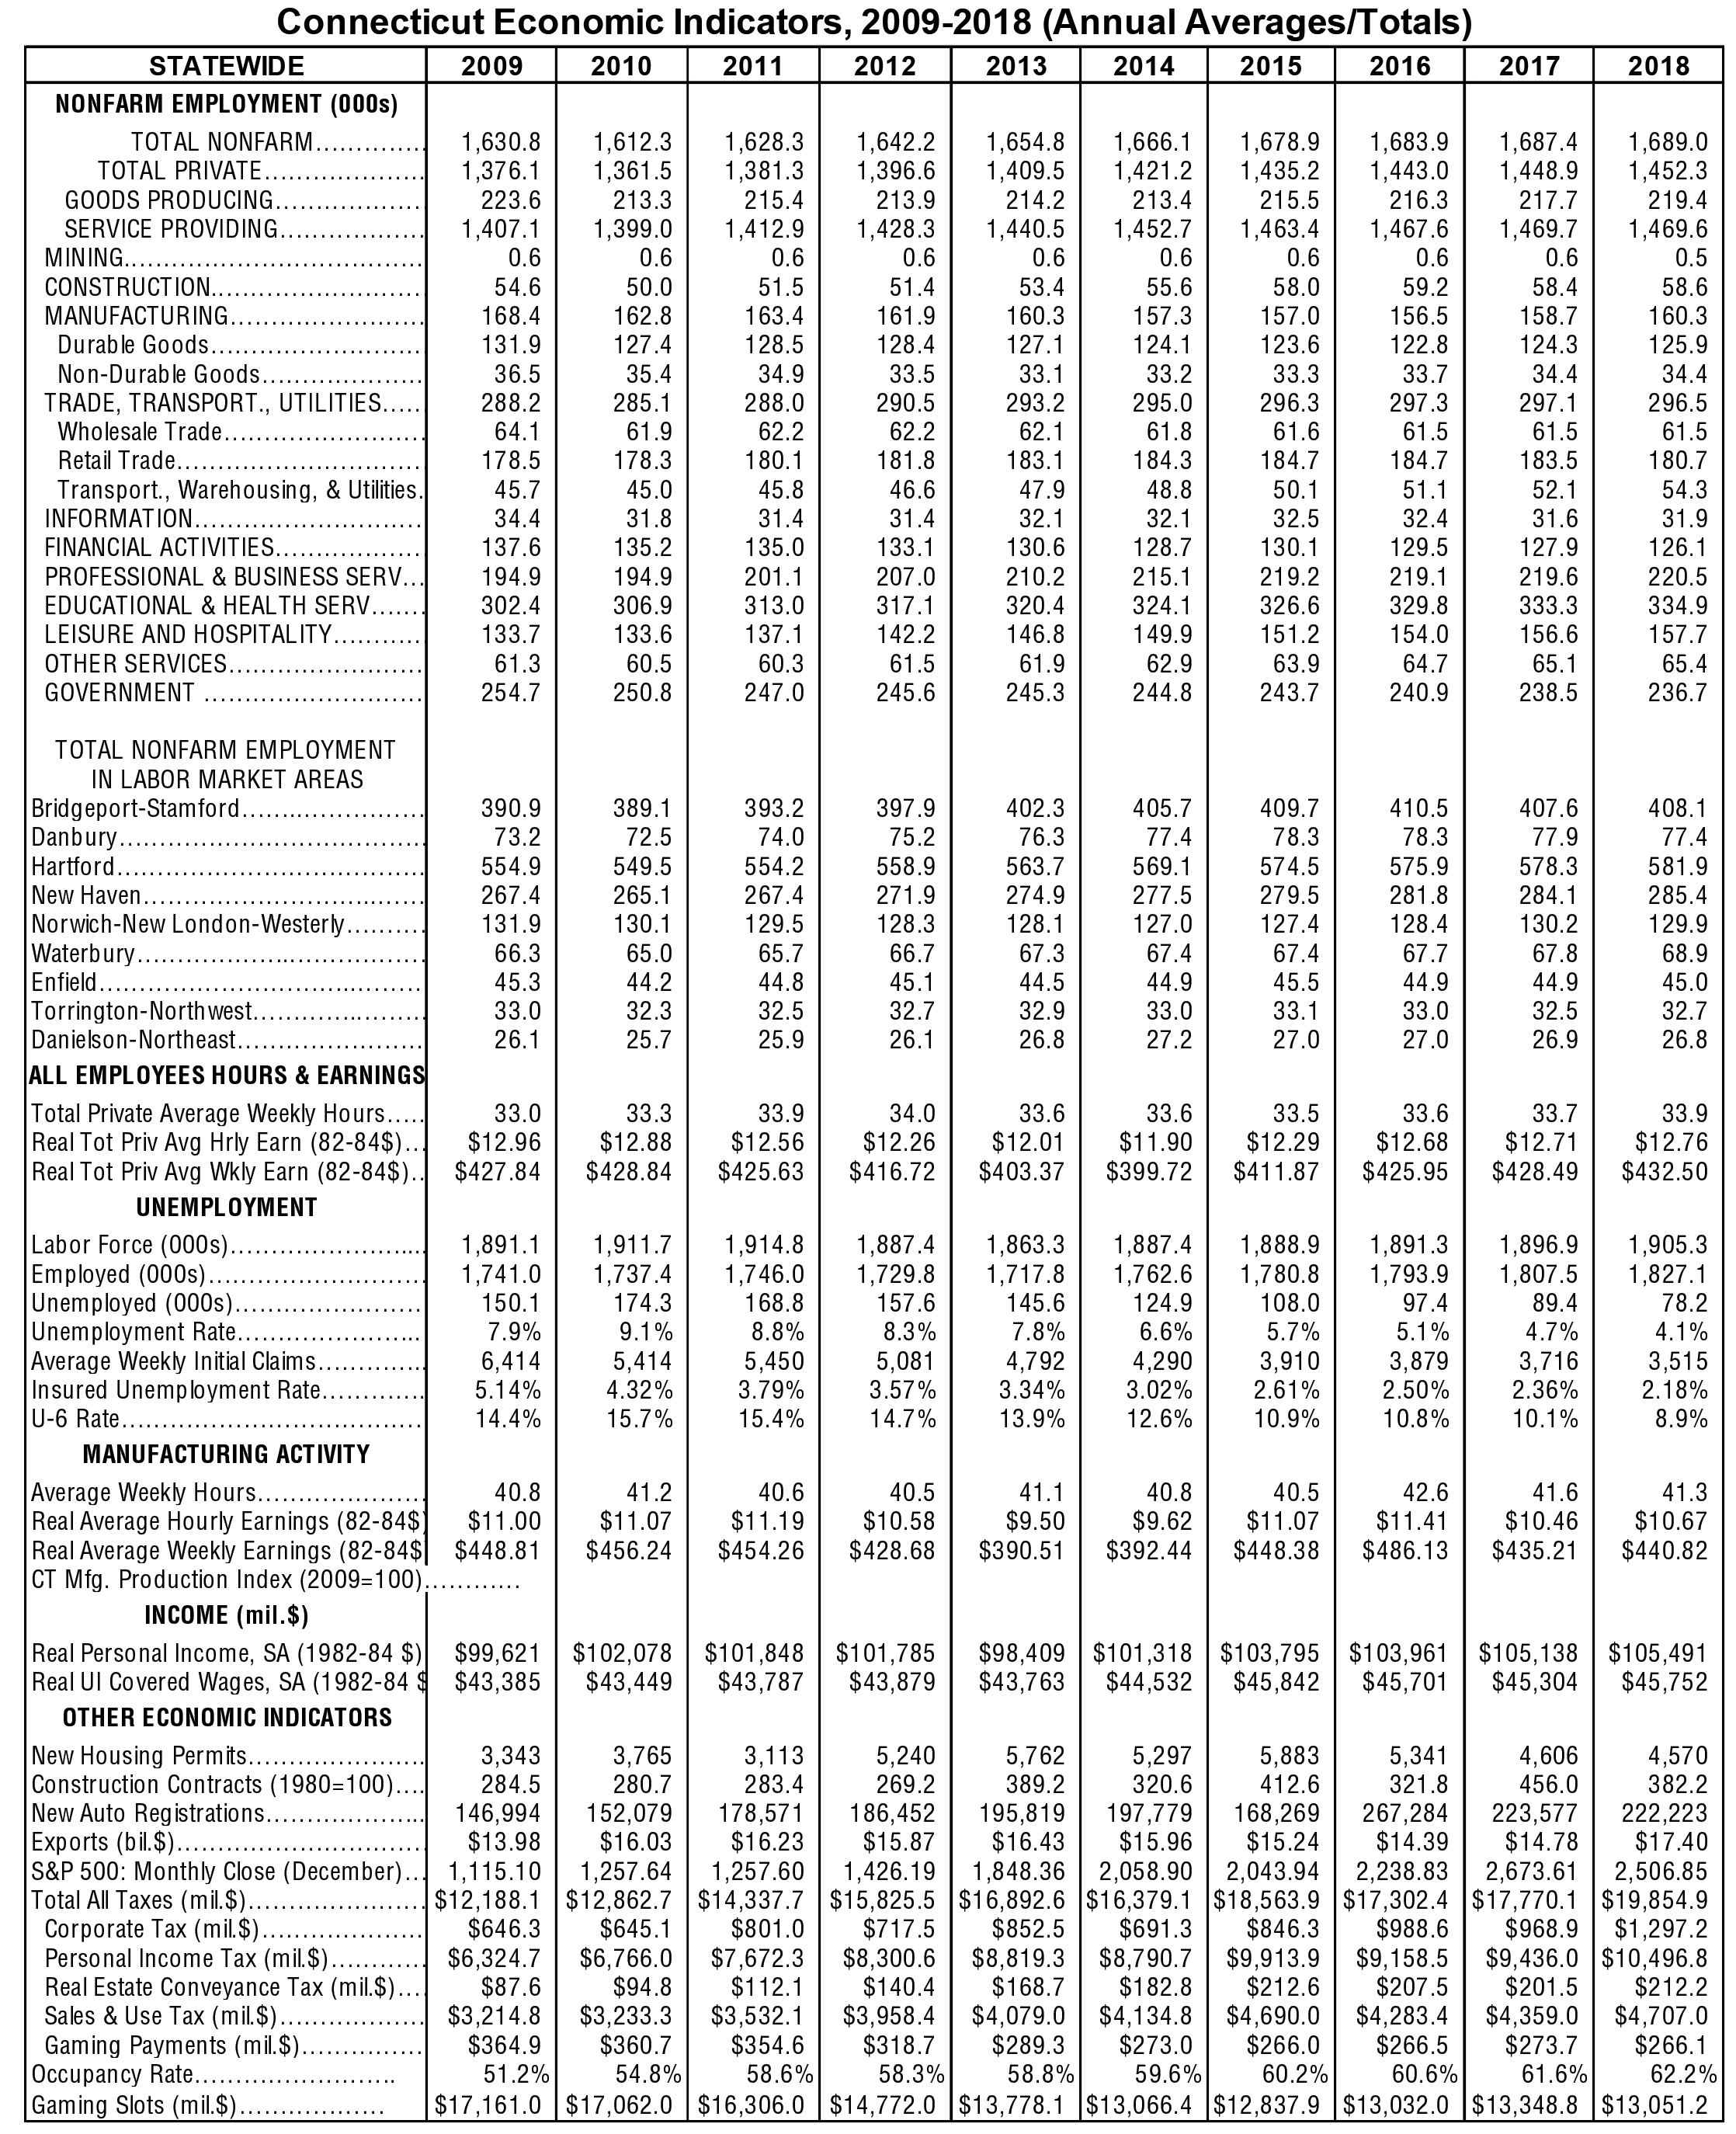 Table 1: Connecticut Economic Indicators, 2009-2018 (Annual Averages/Totals)